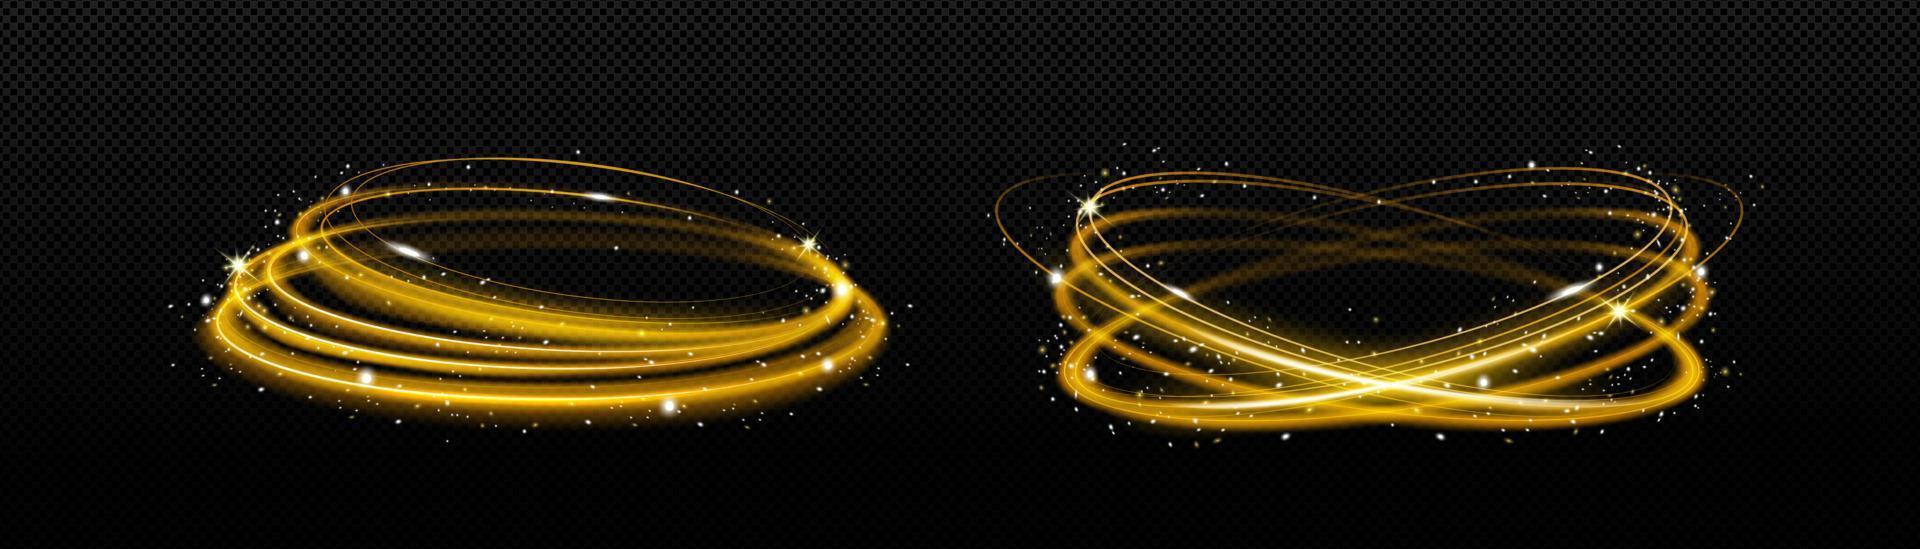 goud gloed spinnen cirkels, snelheid, beweging effect vector